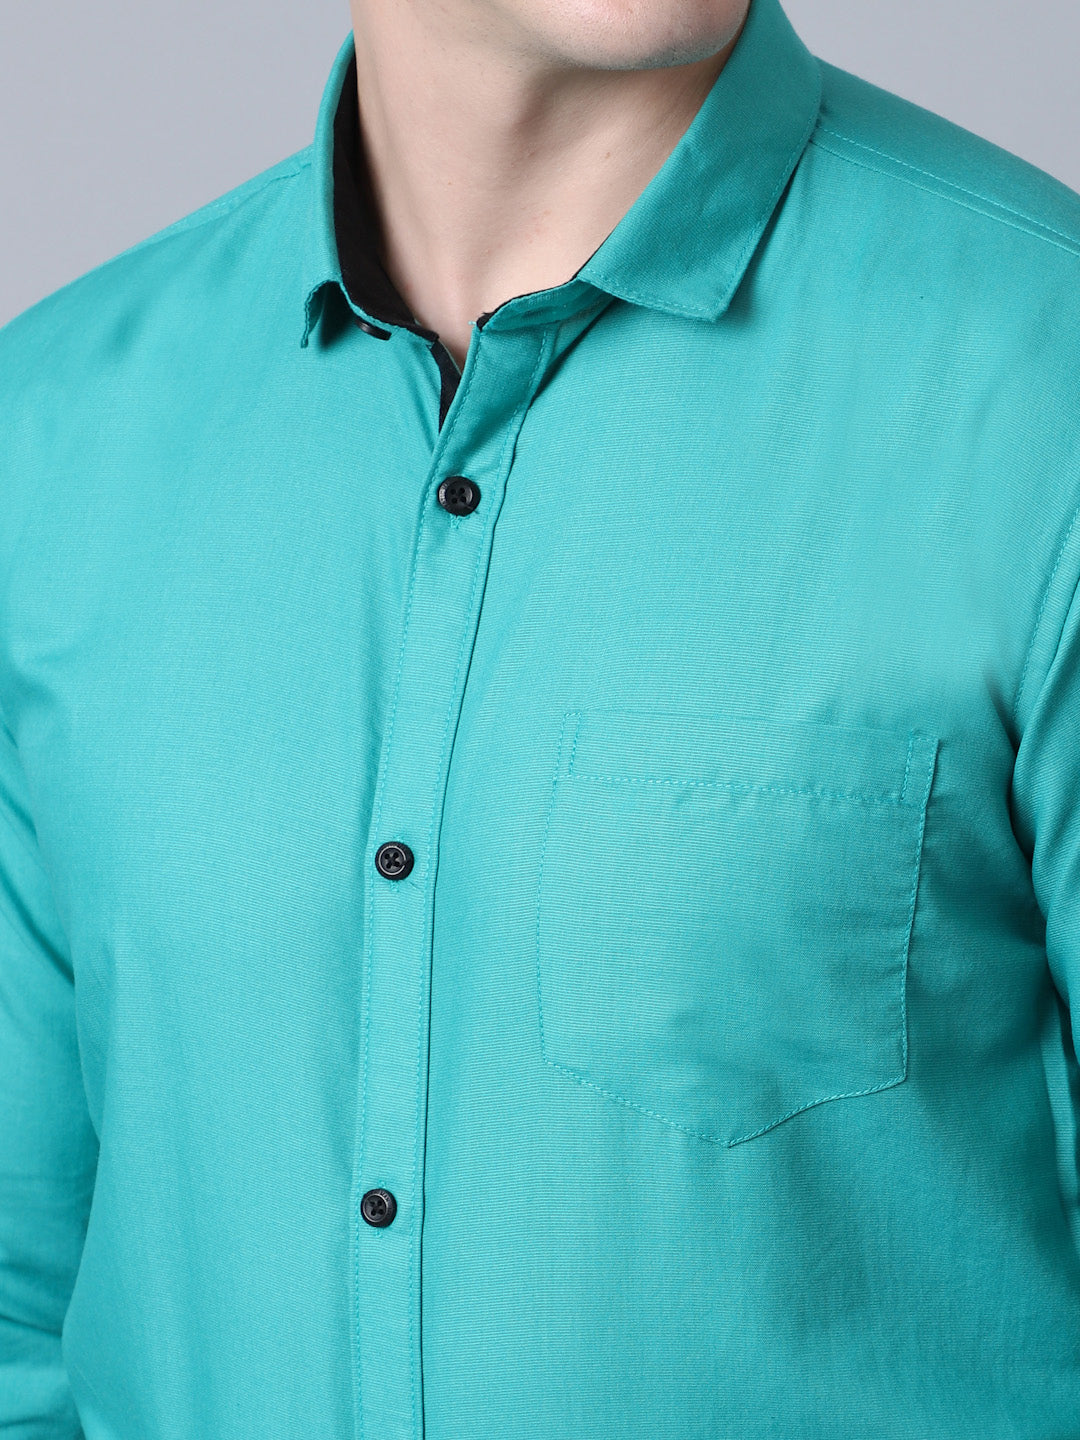 Majestic Man Versatile Solid Formal Shirt - Teal Blue